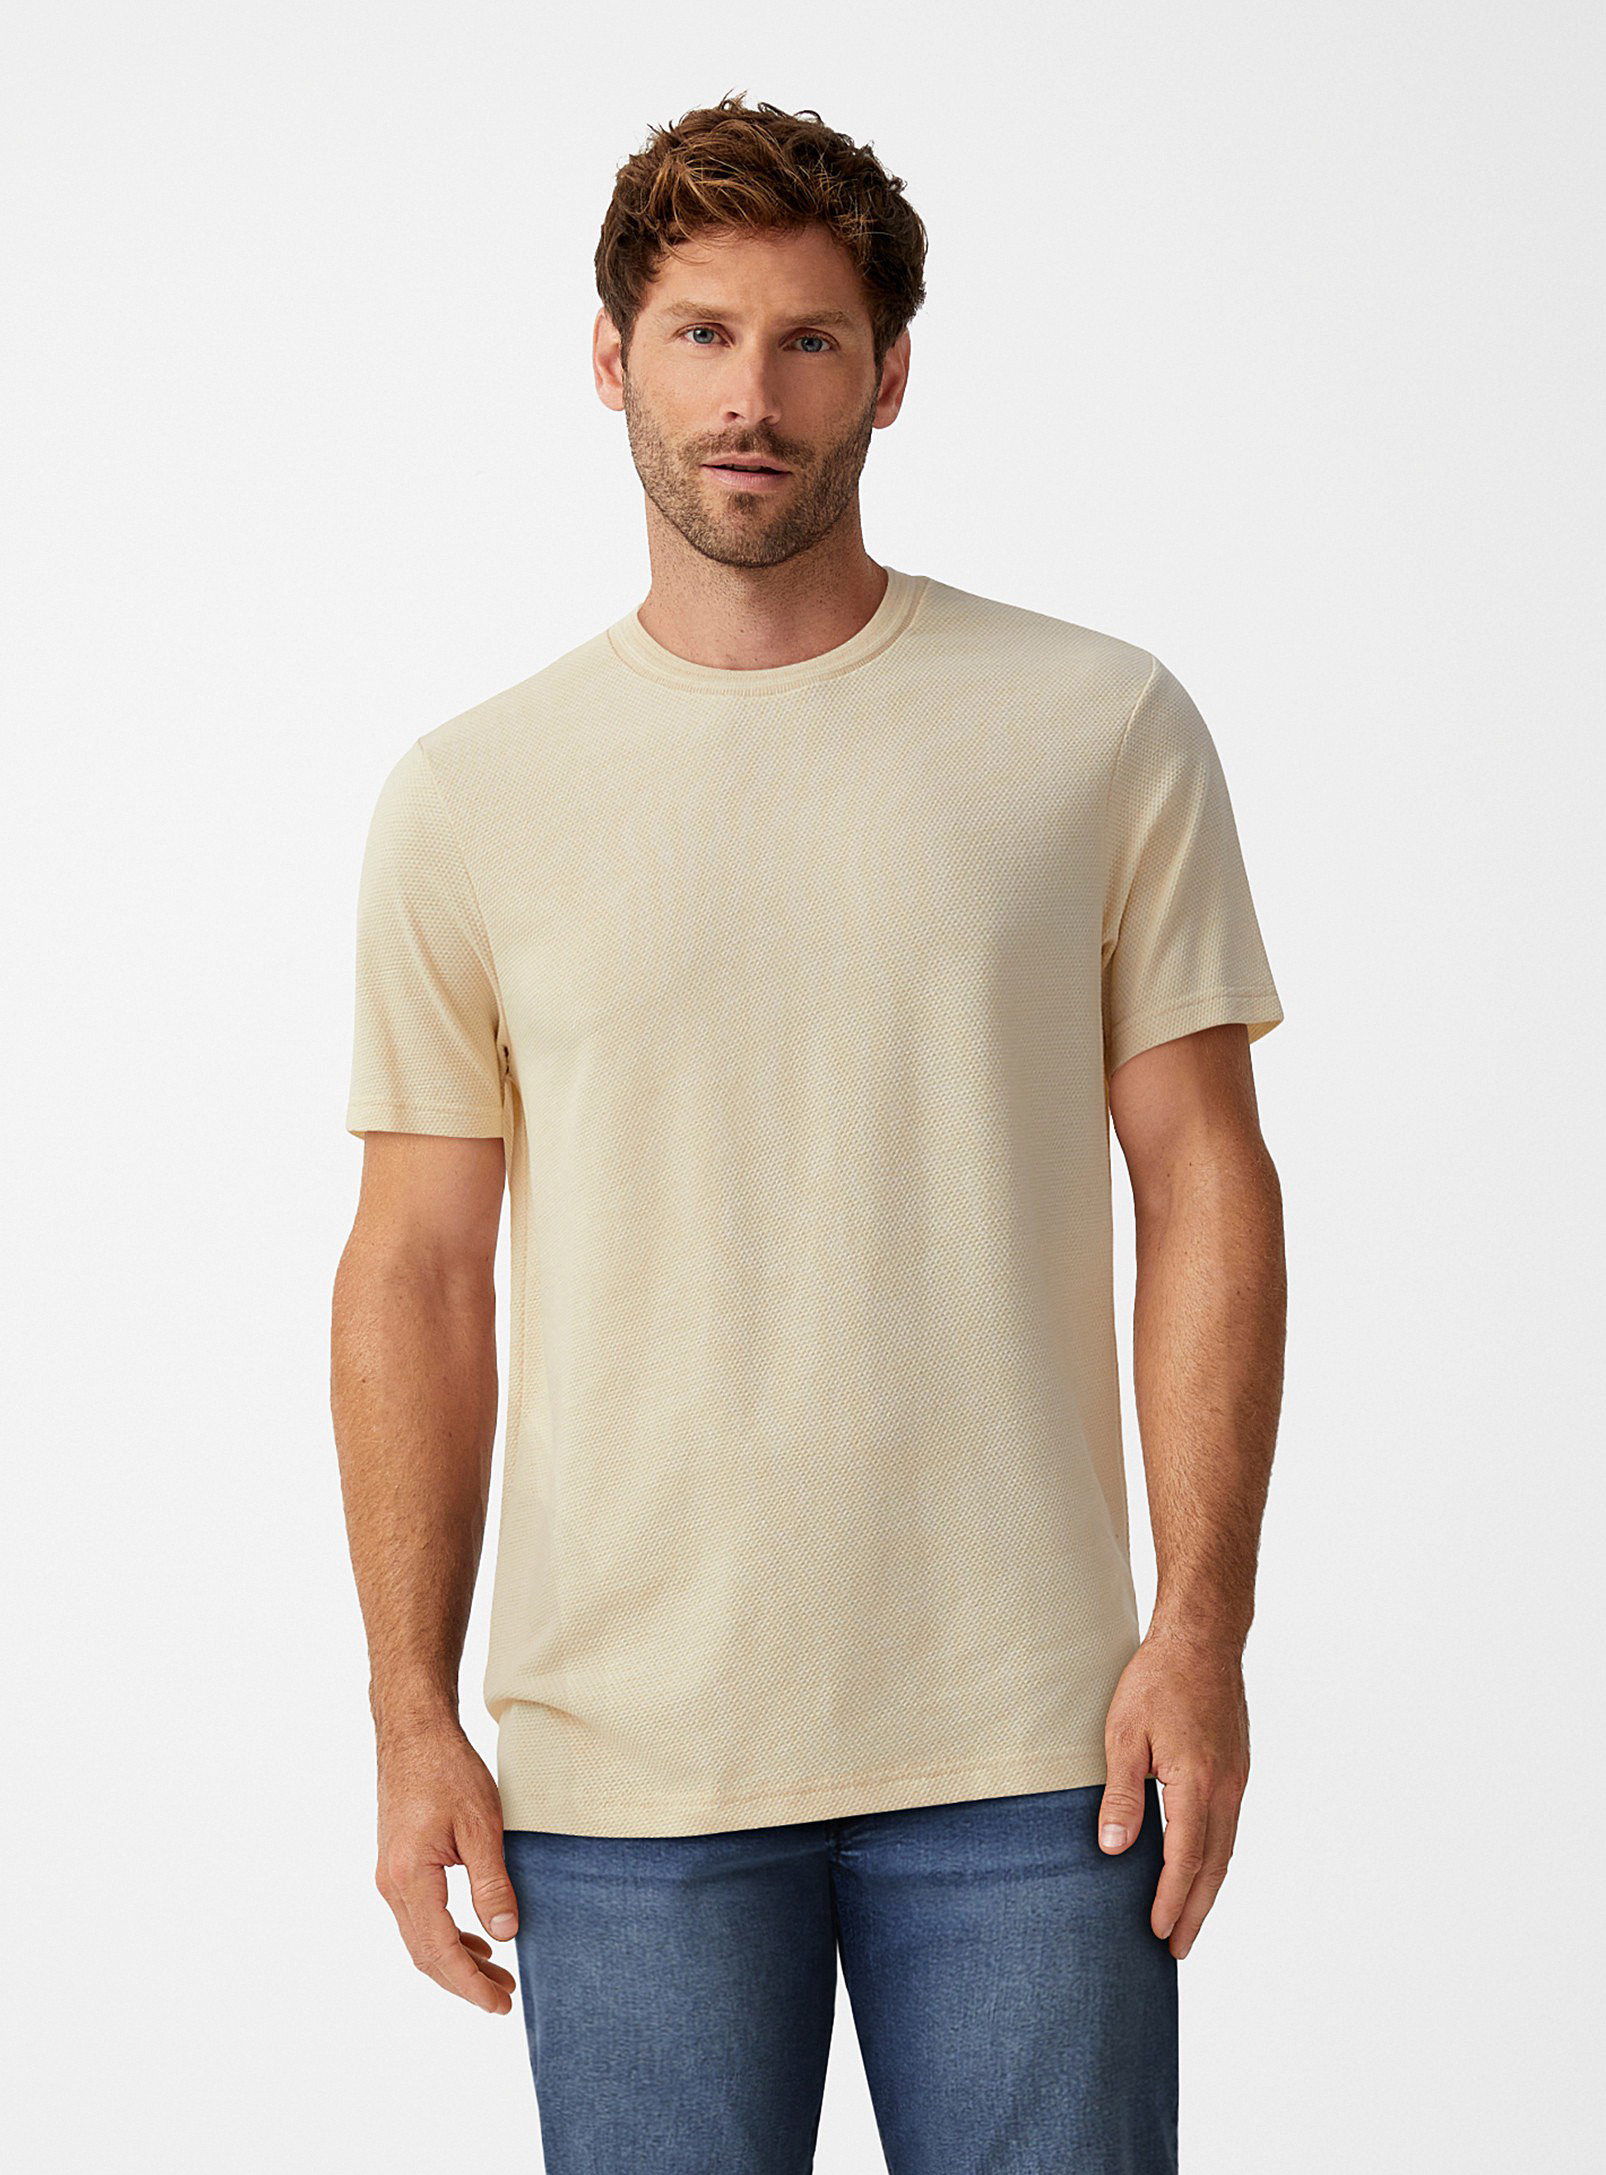 Rumors Textured Jersey T-shirt In Ivory/cream Beige